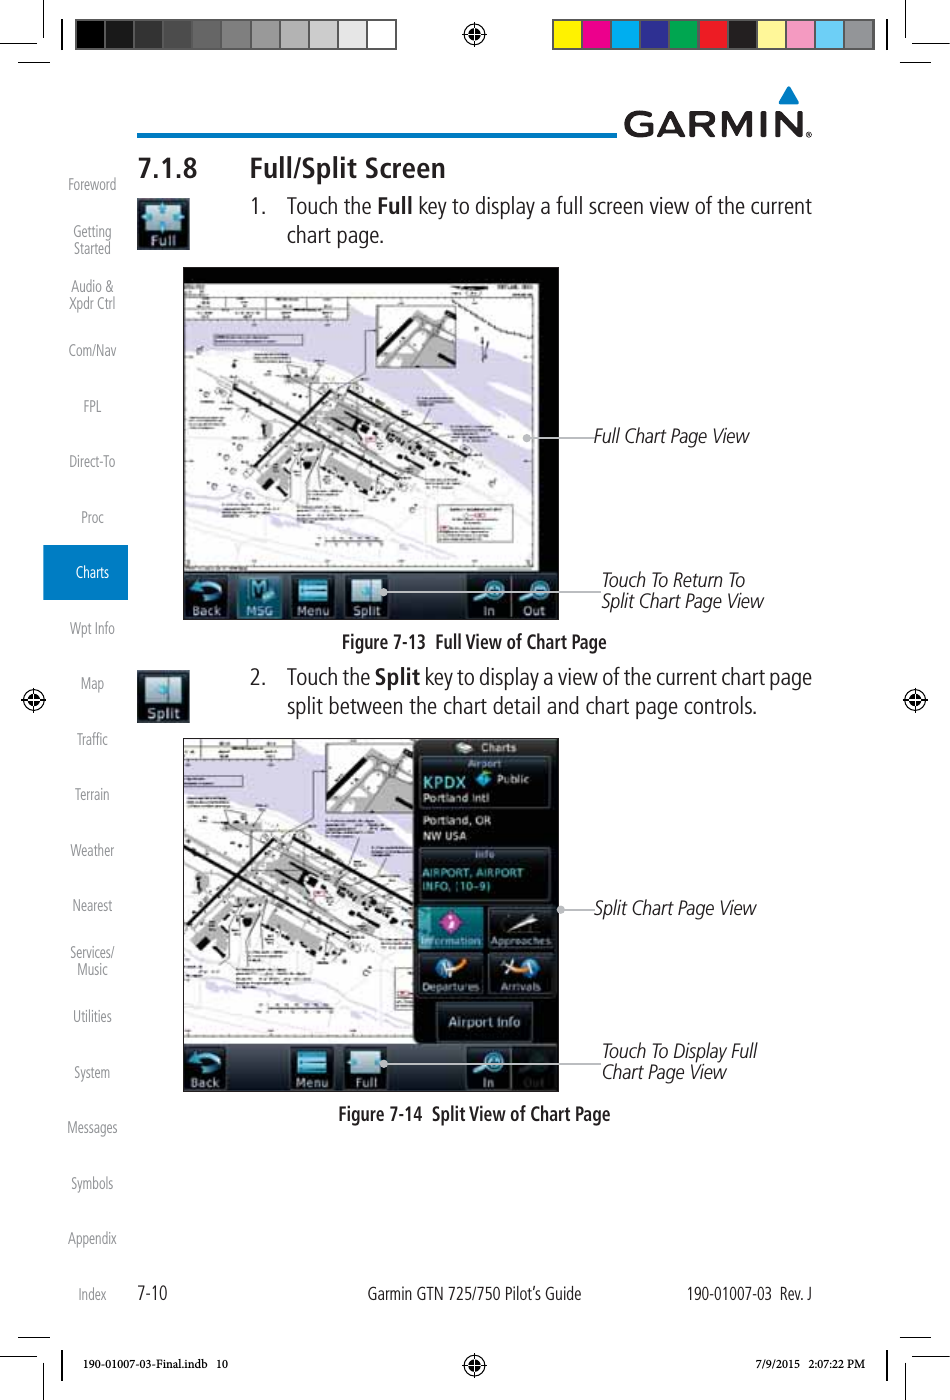 7-10Garmin GTN 725/750 Pilot’s Guide190-01007-03  Rev. JForewordGetting StartedAudio &amp;  Xpdr CtrlCom/NavFPLDirect-ToProcChartsWpt InfoMapTrafﬁcTerrainWeatherNearestServices/ MusicUtilitiesSystemMessagesSymbolsAppendixIndex7.1.8 Full/Split Screen 1. Touch the Full key to display a full screen view of the current chart page. Full Chart Page ViewTouch To Return To Split Chart Page ViewFigure 7-13  Full View of Chart Page 2. Touch the Split key to display a view of the current chart page split between the chart detail and chart page controls. Split Chart Page ViewTouch To Display Full Chart Page ViewFigure 7-14  Split View of Chart Page190-01007-03-Final.indb   10 7/9/2015   2:07:22 PM